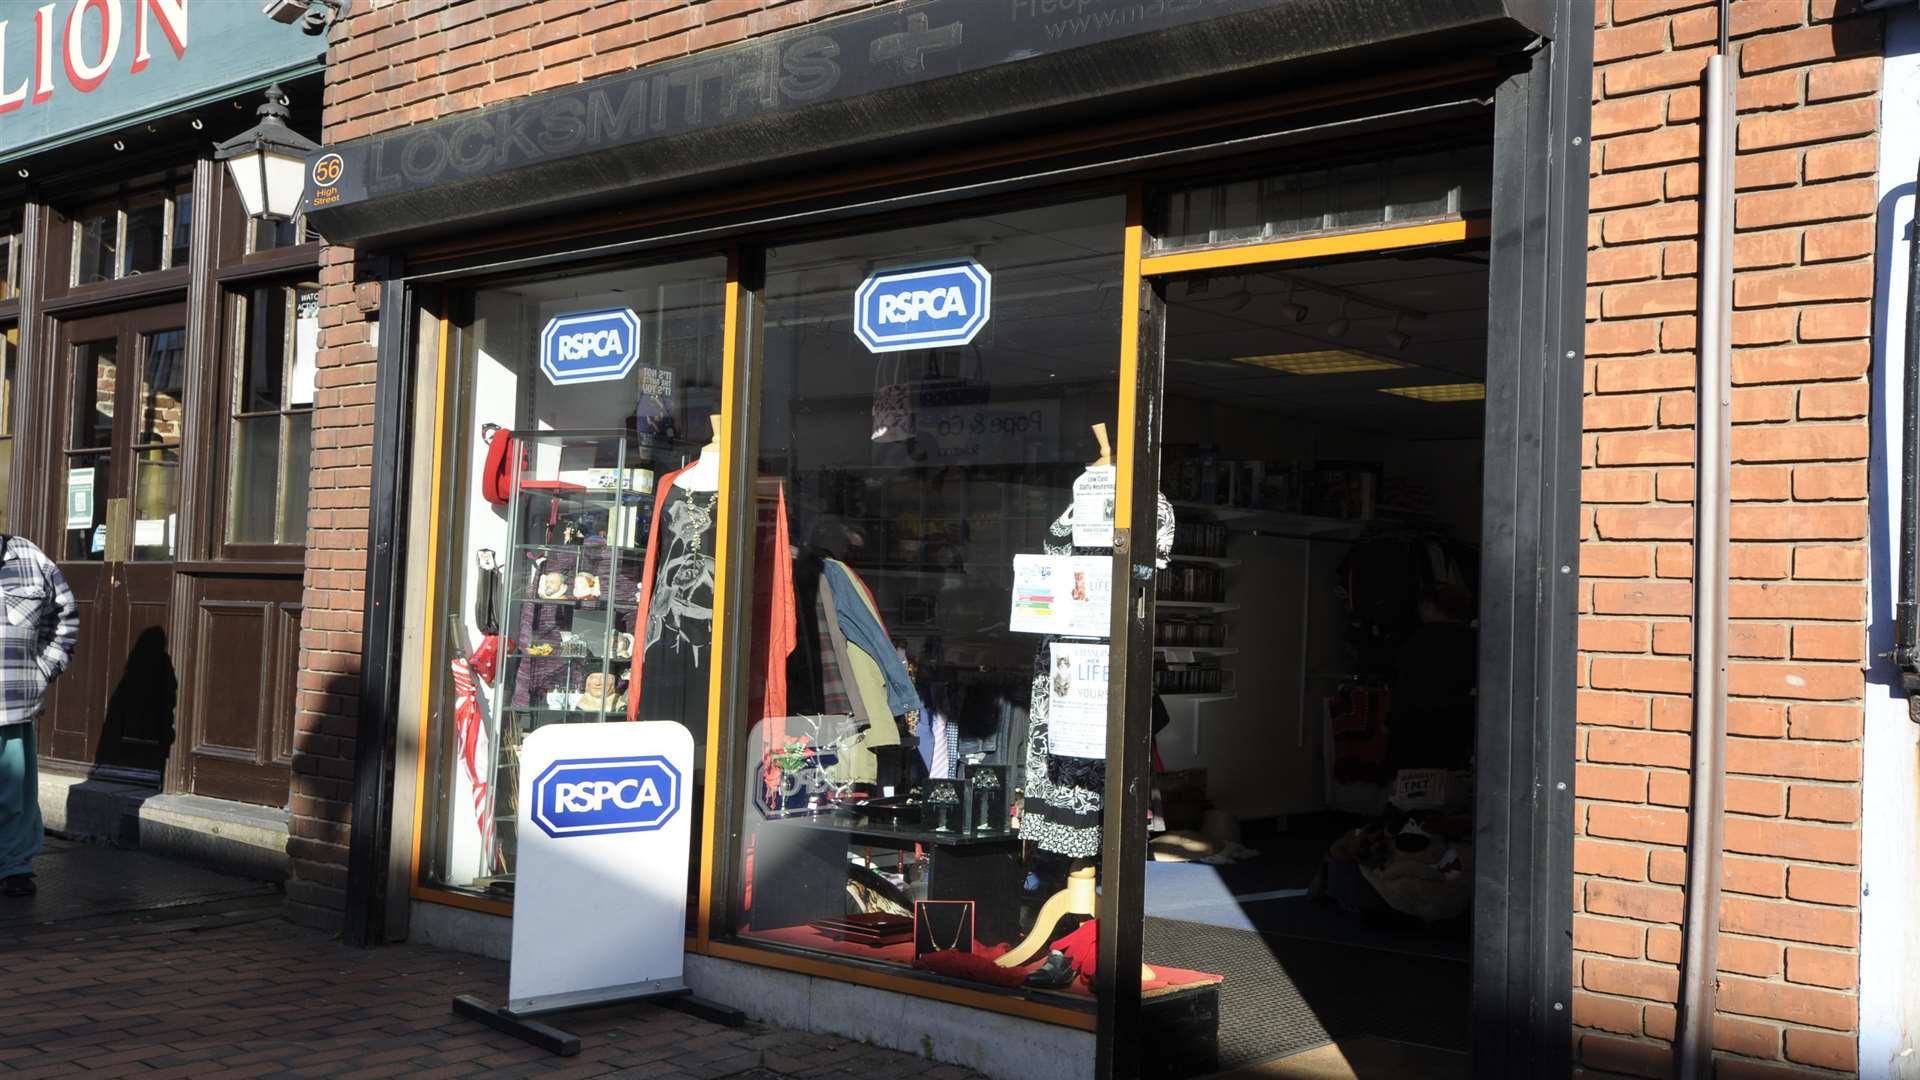 The RSPCA shop, High Street, Sittingbourne,